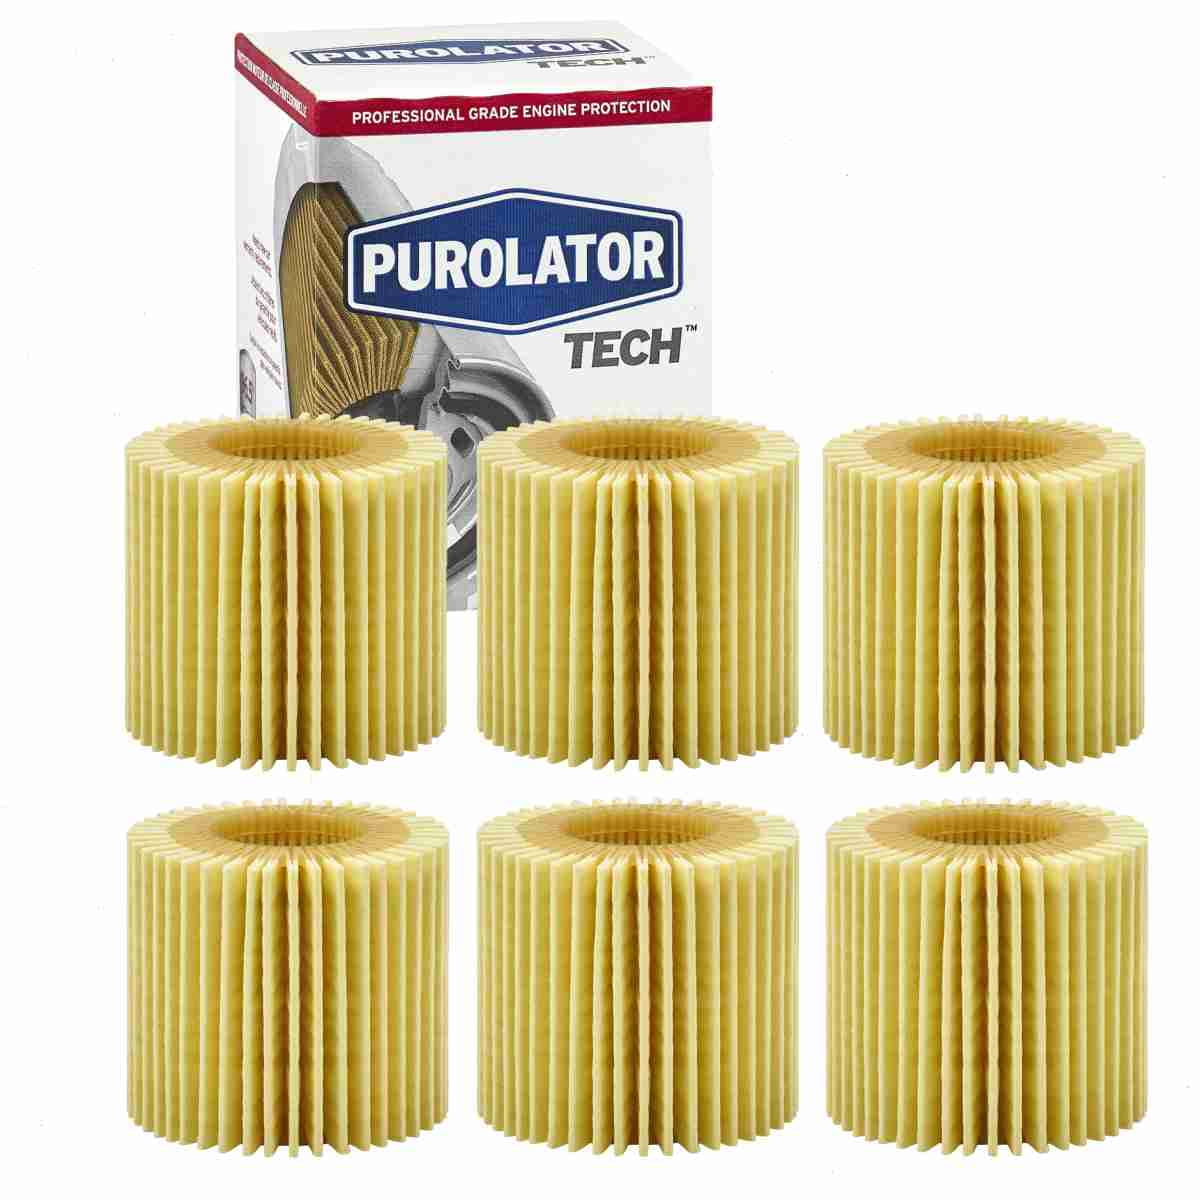 6 pc Purolator TECH TL16311 Engine Oil Filters for 04152-37010